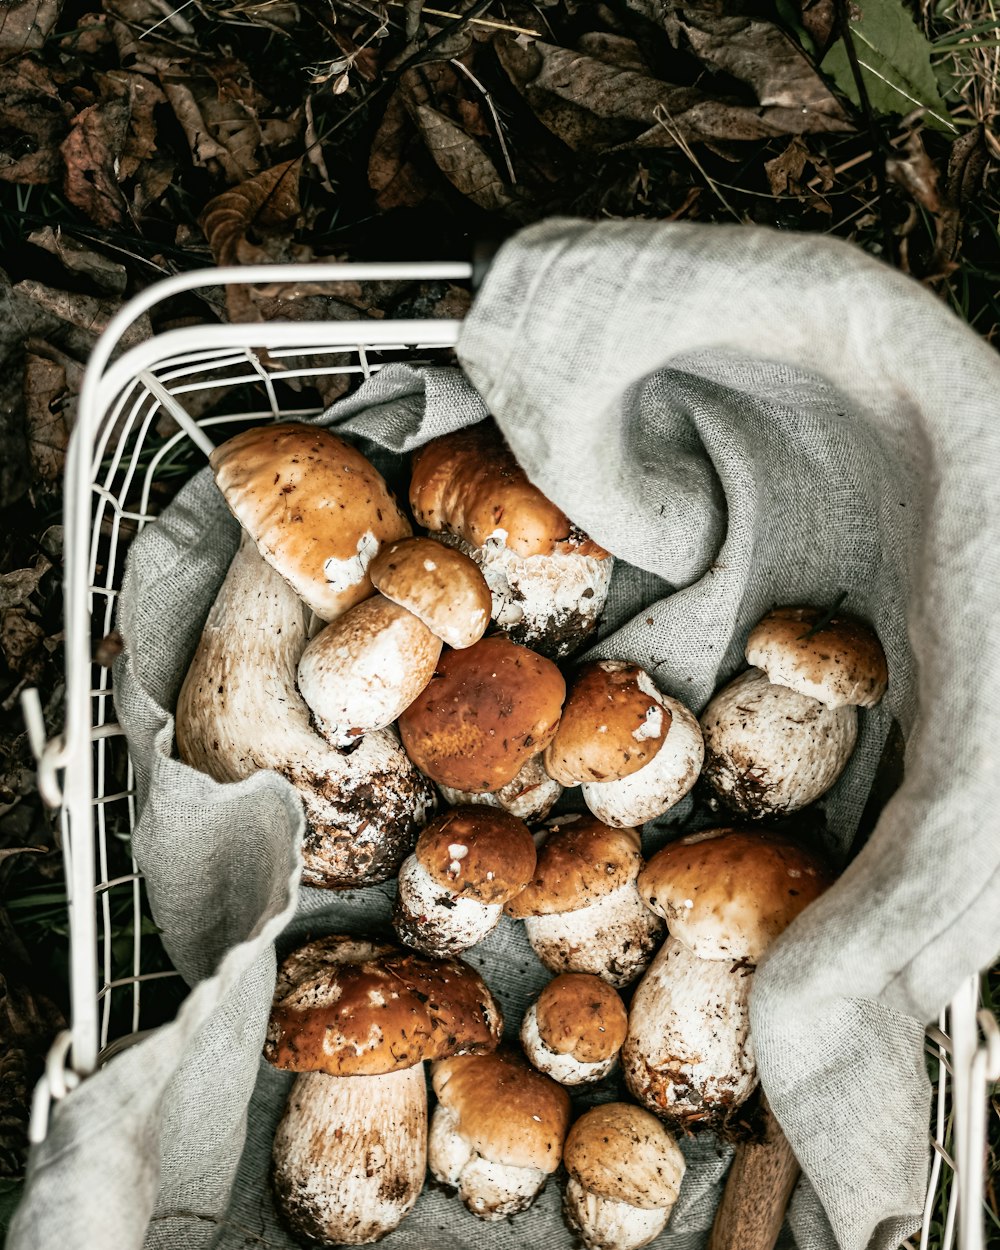 brown and white mushrooms on white metal rack